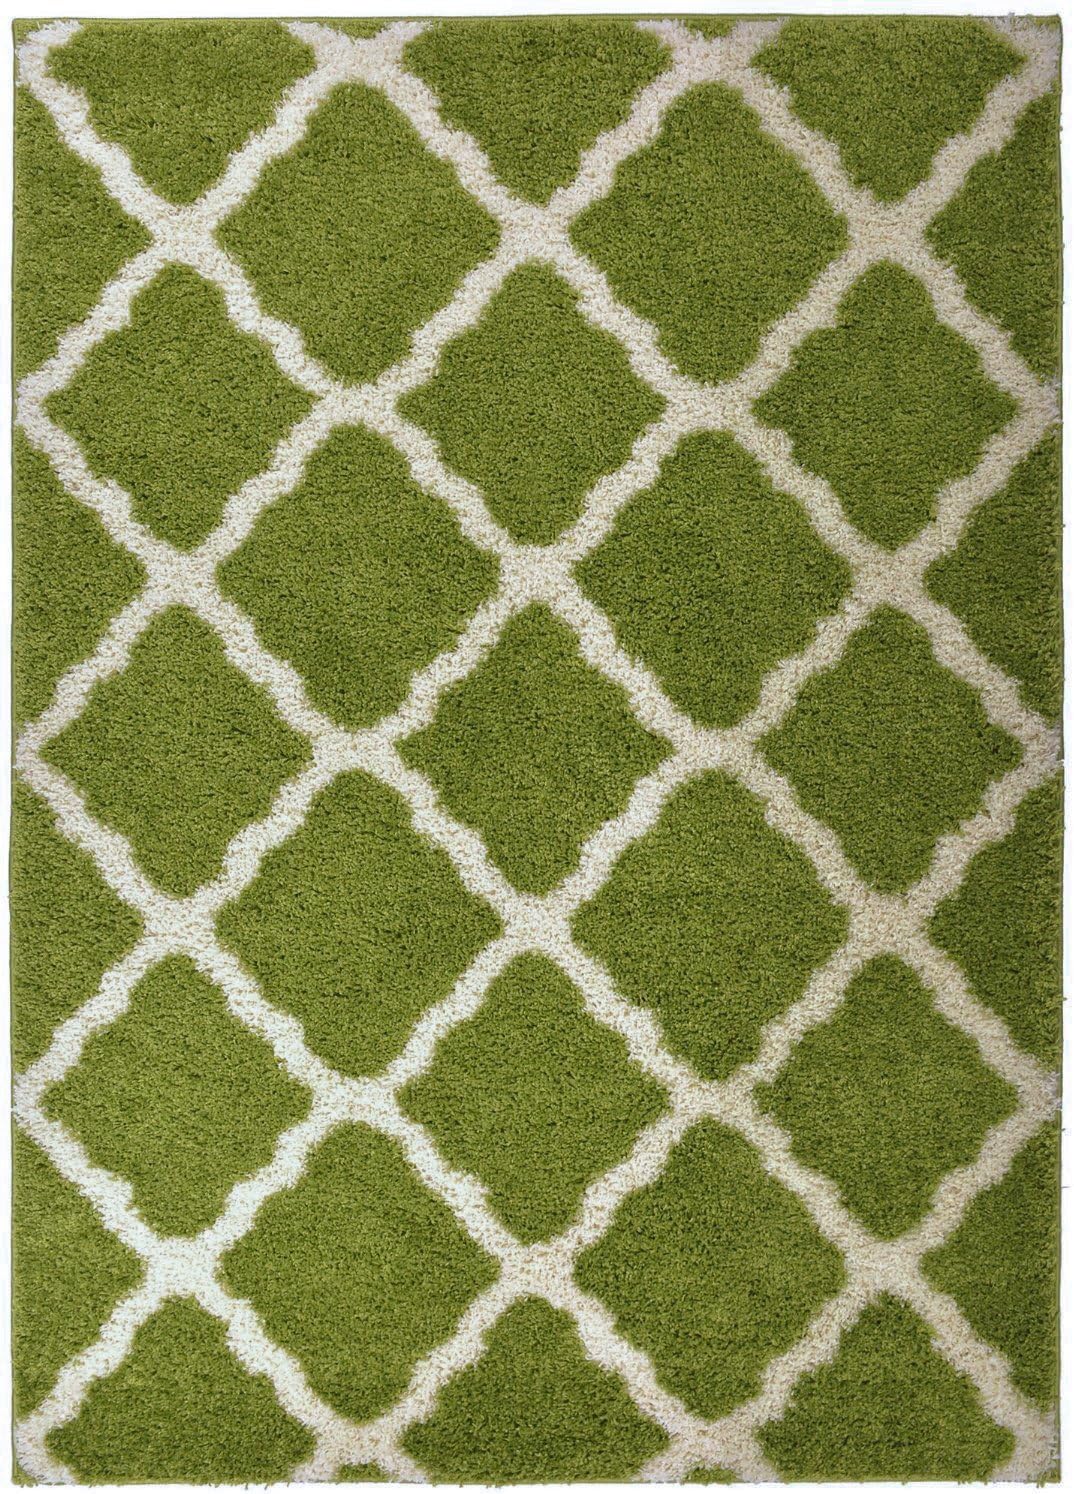 SOHO Shaggy Collection Trellis Lattice Design Shag Area Rug (Green, 8 x 10)